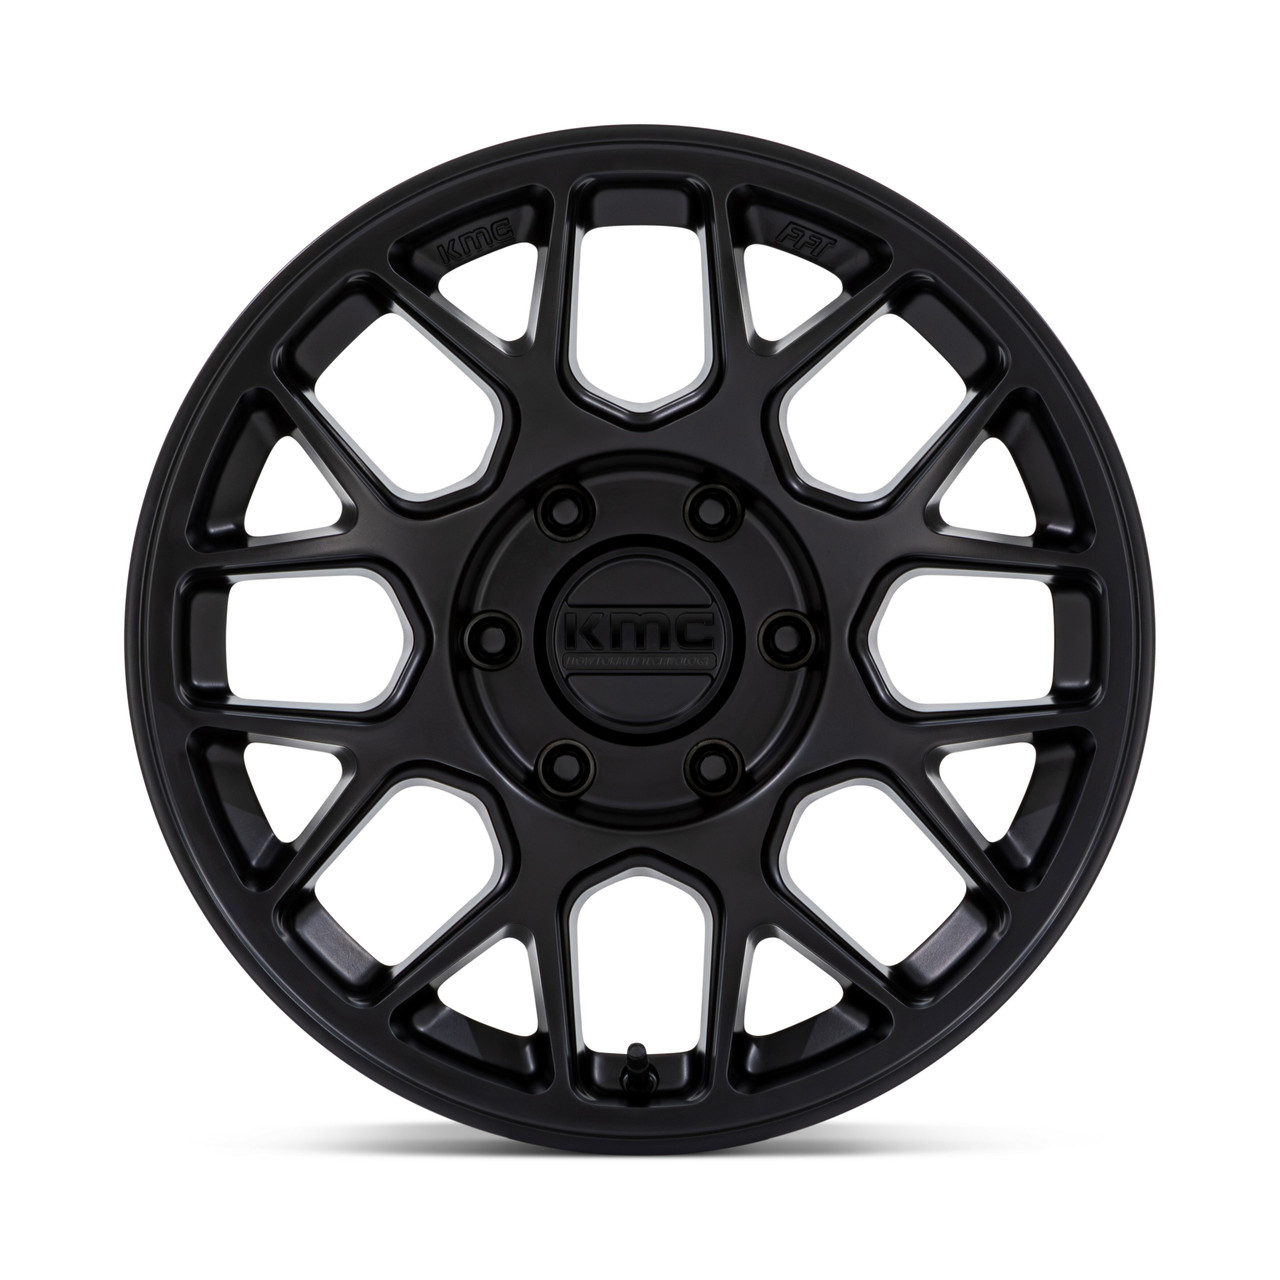 17" KMC KM730 Hatchet Matte Black 17x8.5 Wheel 6x120 25mm For Chevy GMC Rim